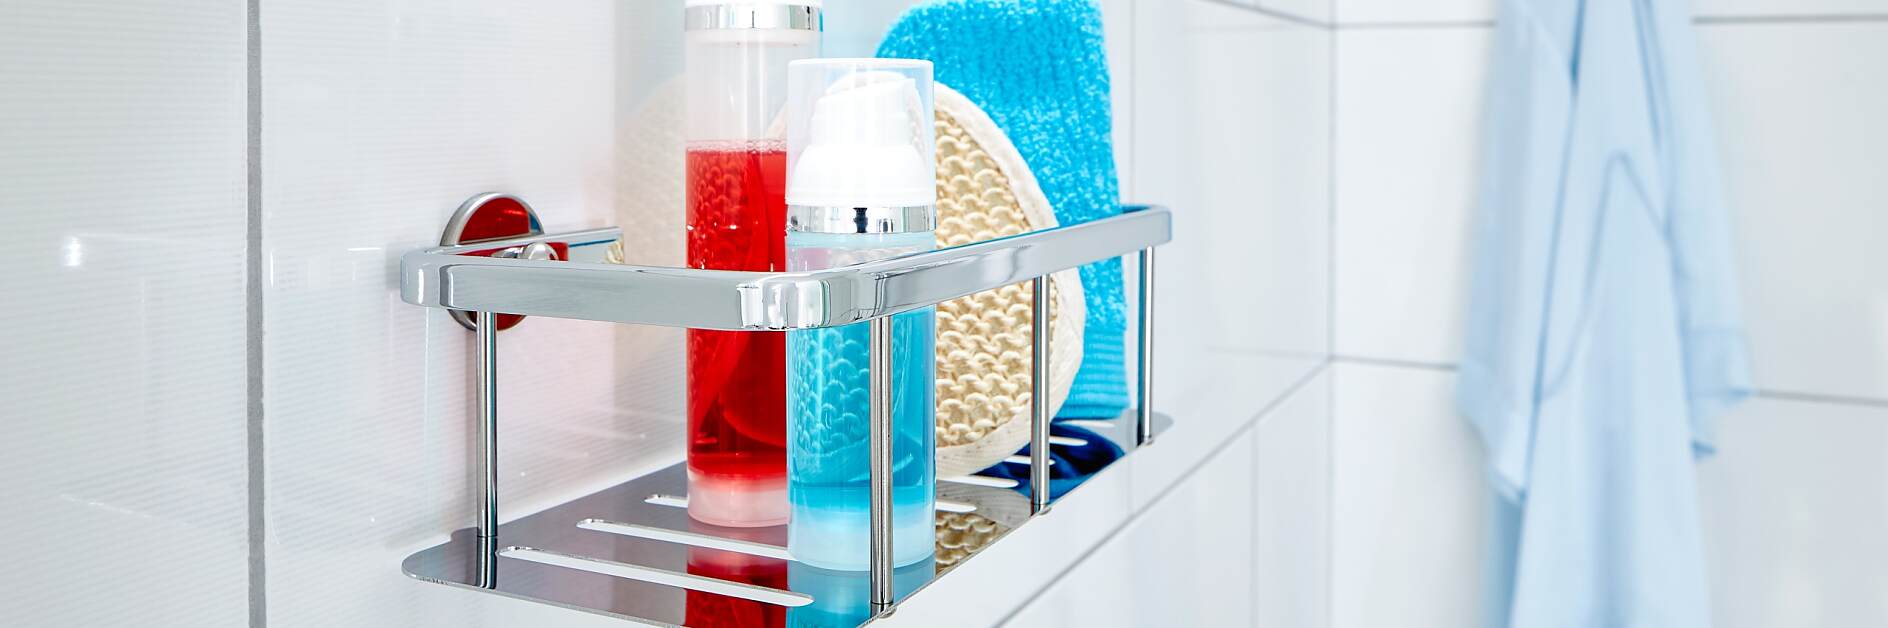 Acrylic Corner Shower Caddy Shelf Bathroom Storage Holder Rack